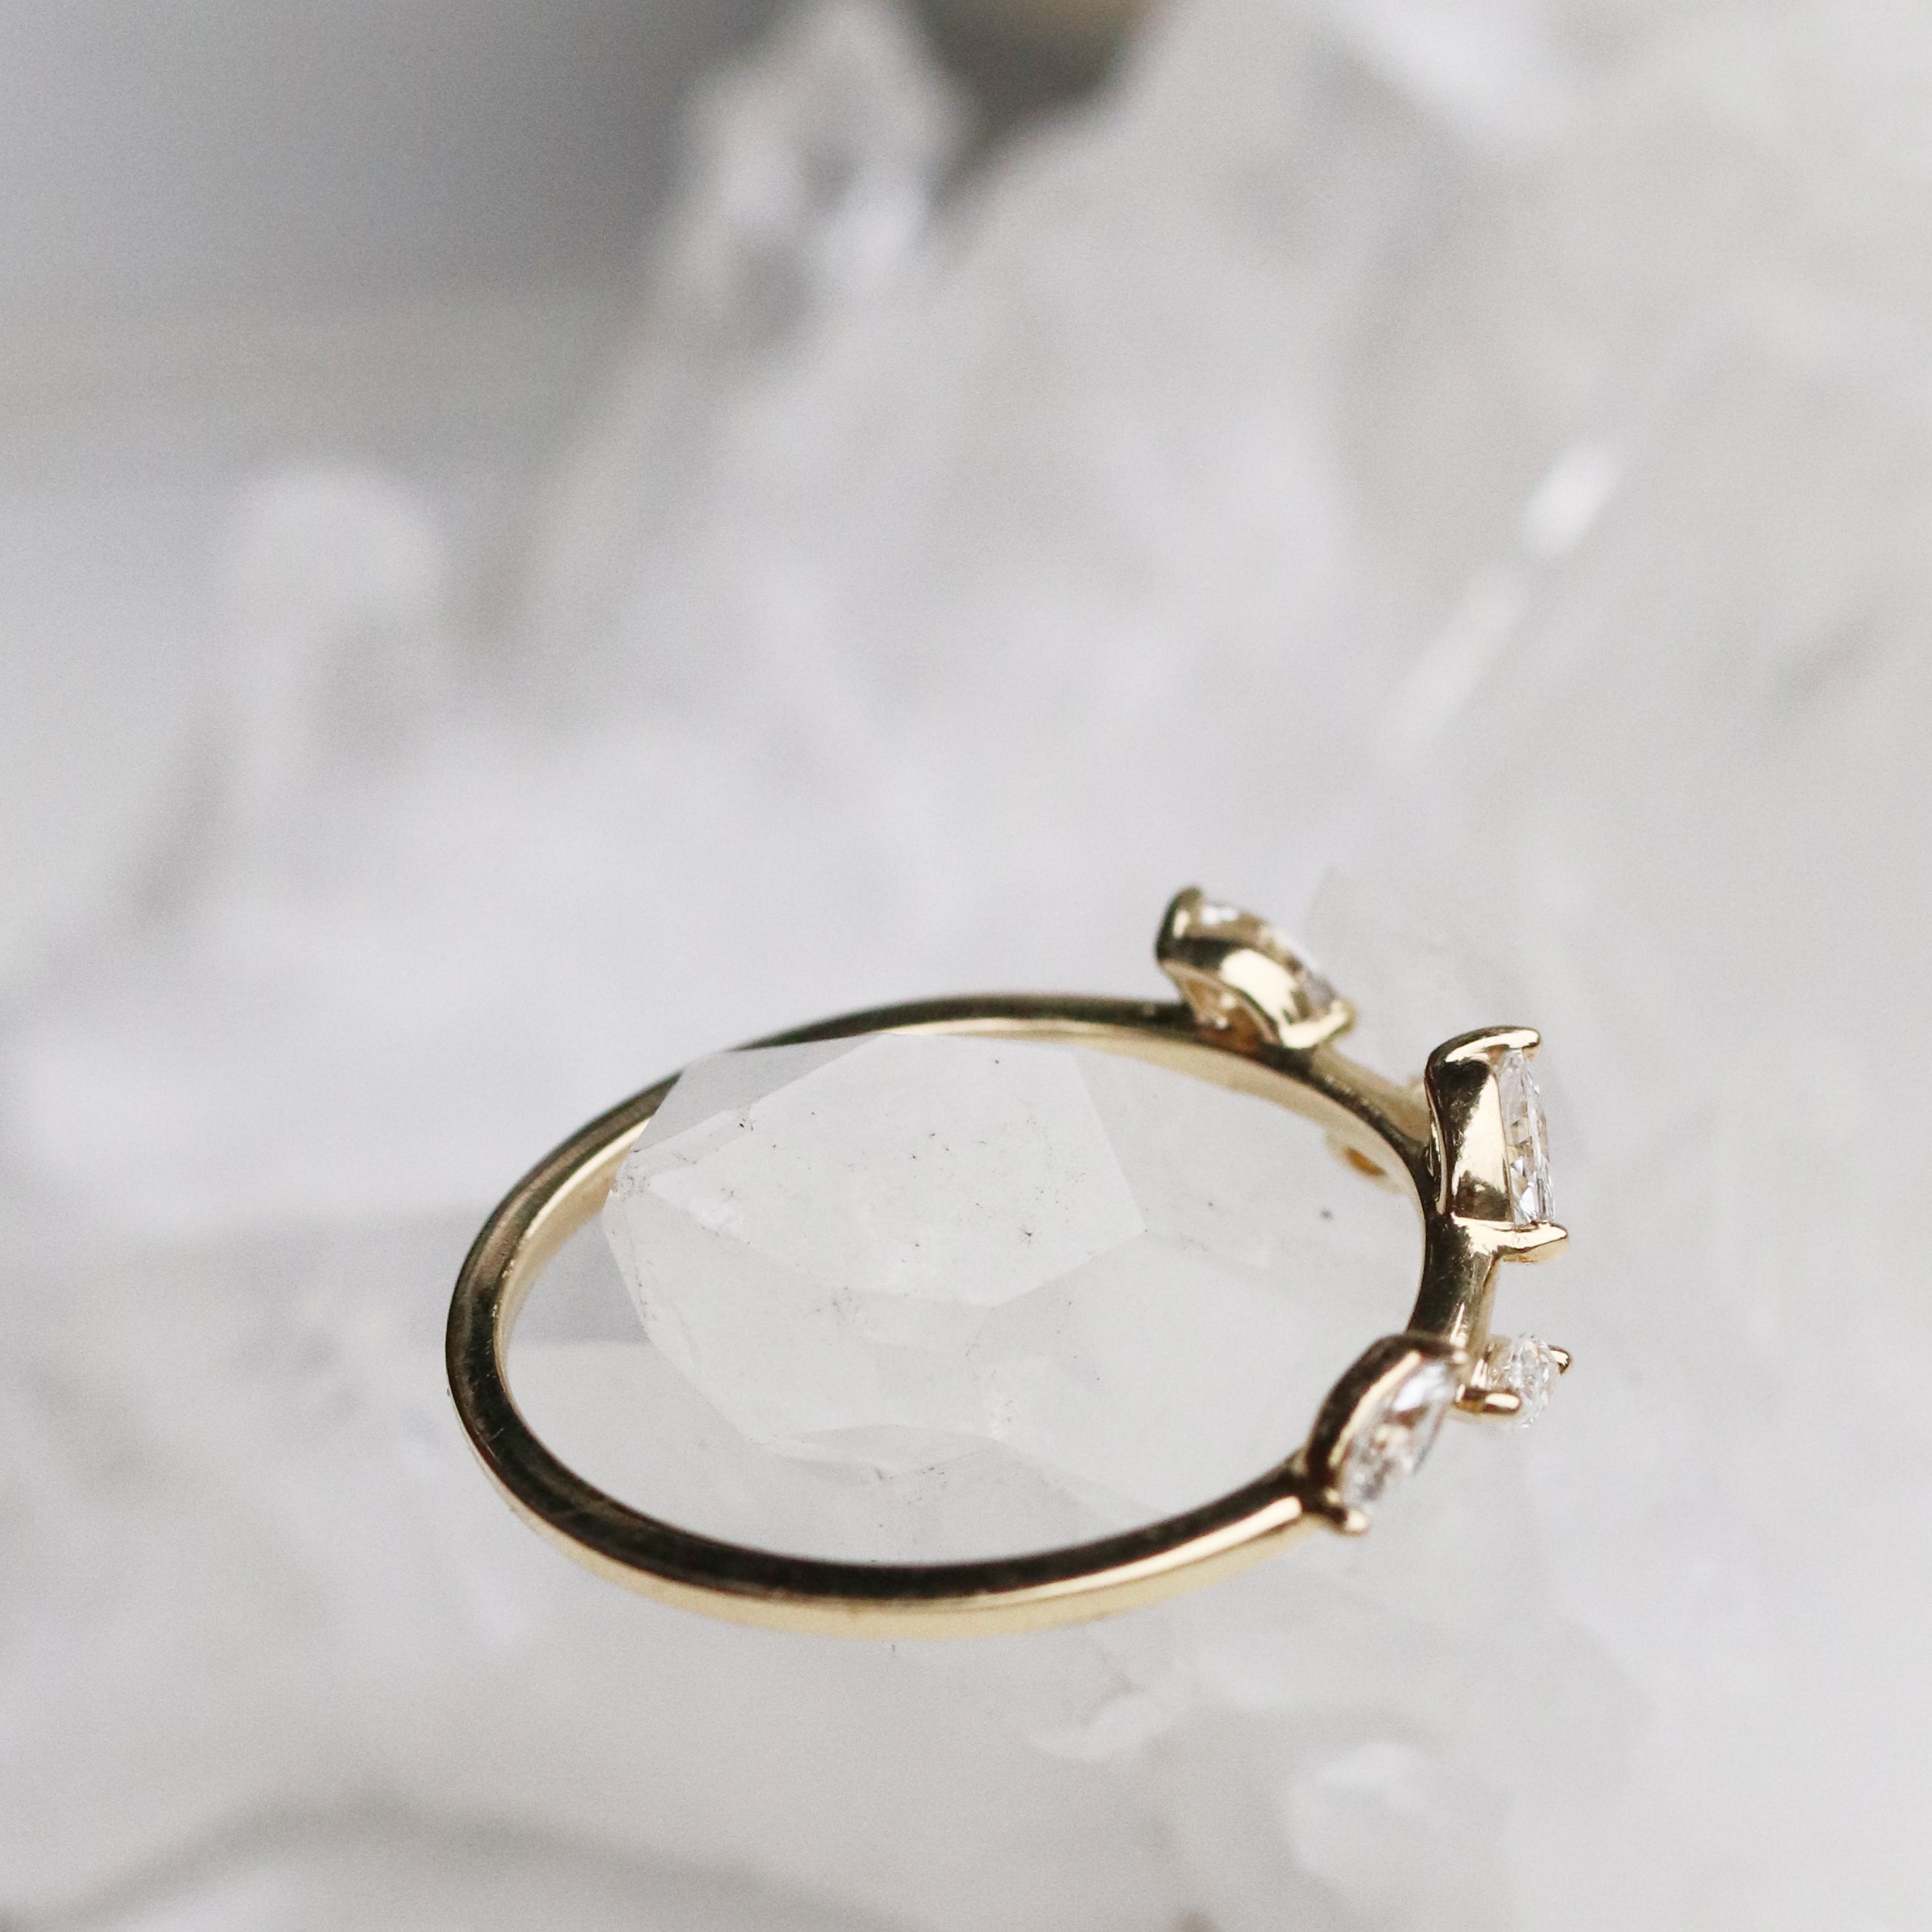 Antique Amethyst Enamel Gold Mens Ring Ref: 498760 - Antique Jewelry |  Vintage Rings | Faberge EggsAntique Jewelry | Vintage Rings | Faberge Eggs